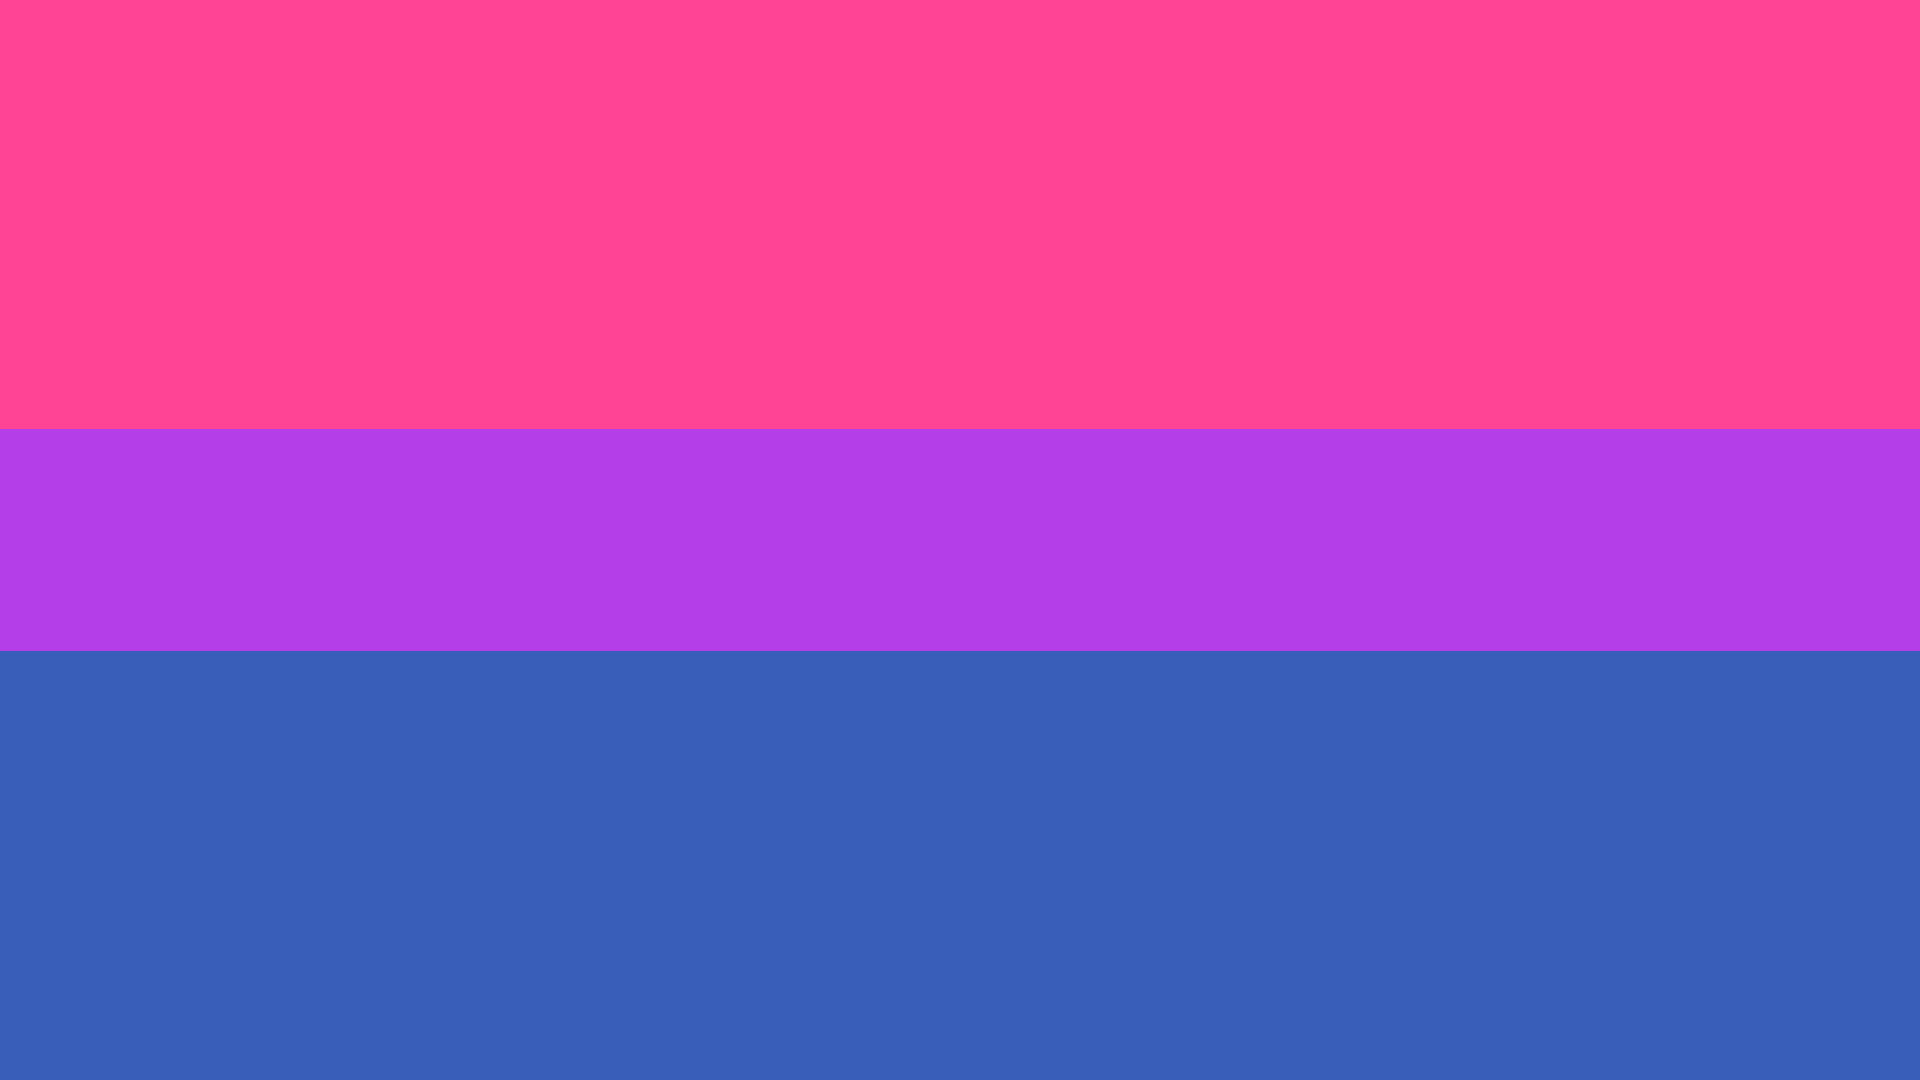 Bisexual pride colors